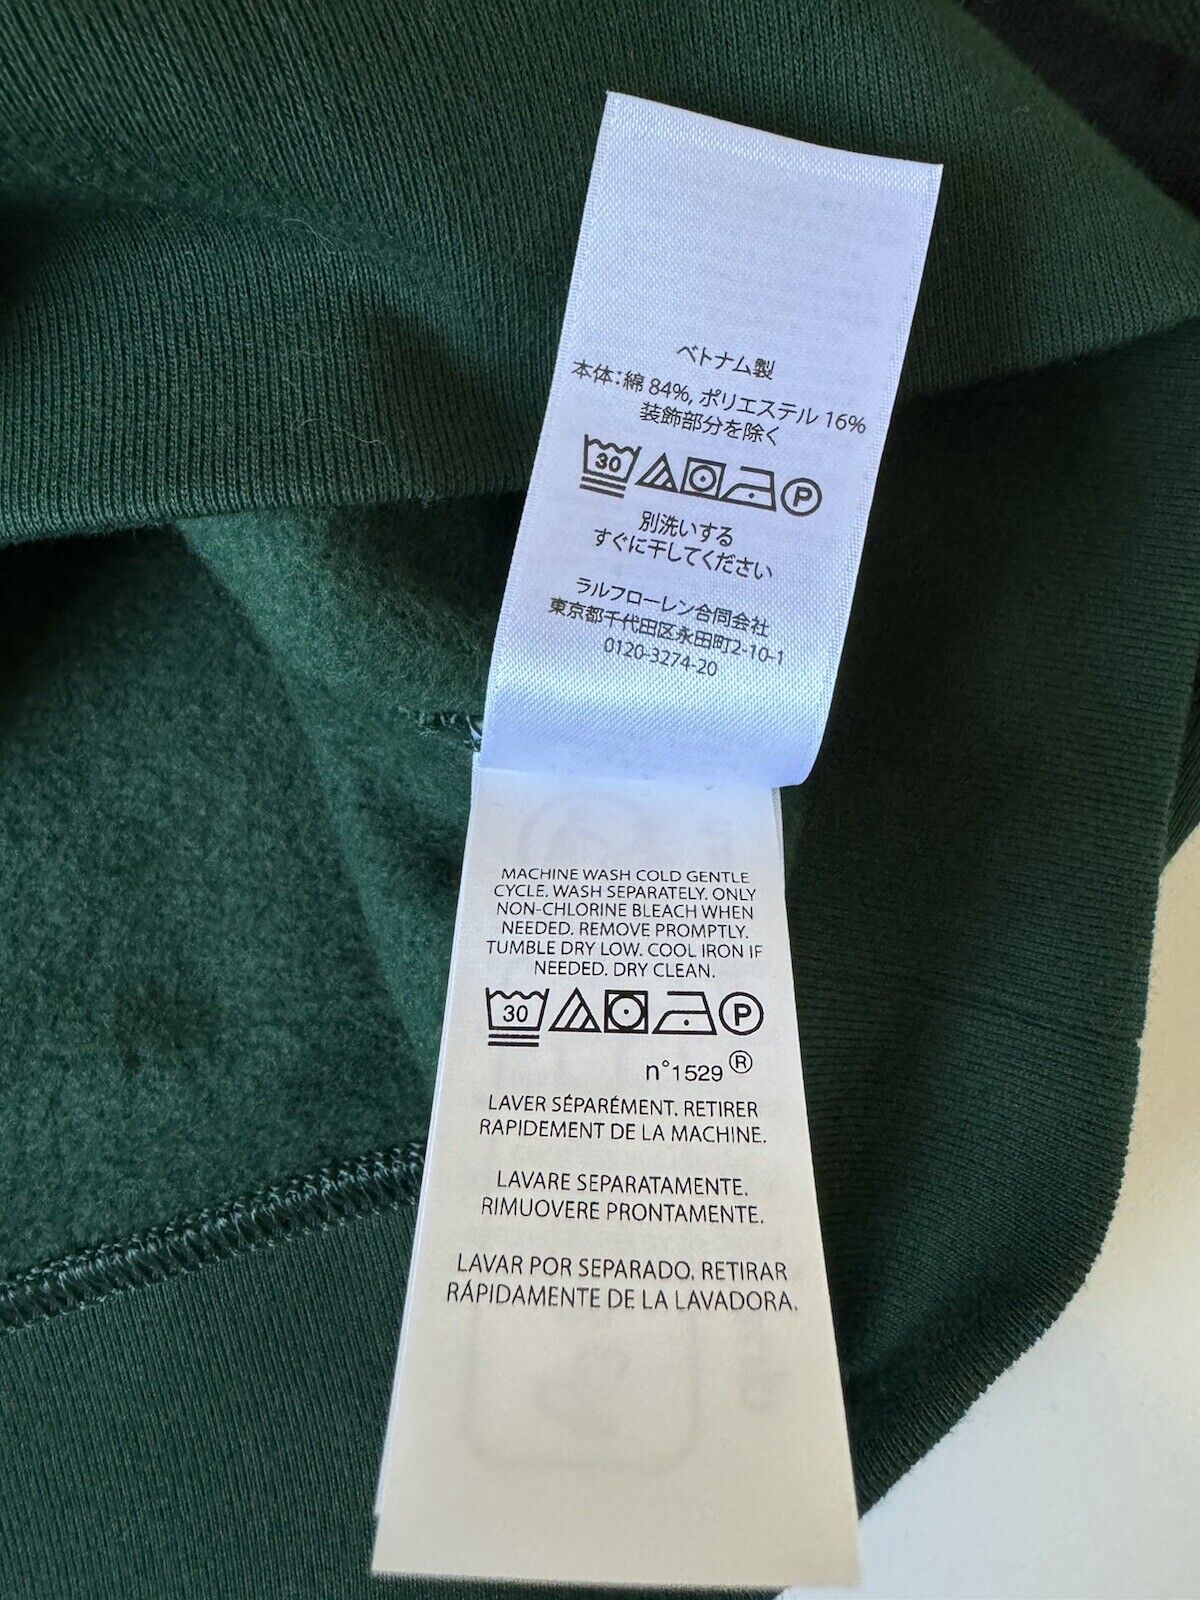 NWT Polo Ralph Lauren Boys Green/Black Cotton Sweater Size M (10-12)